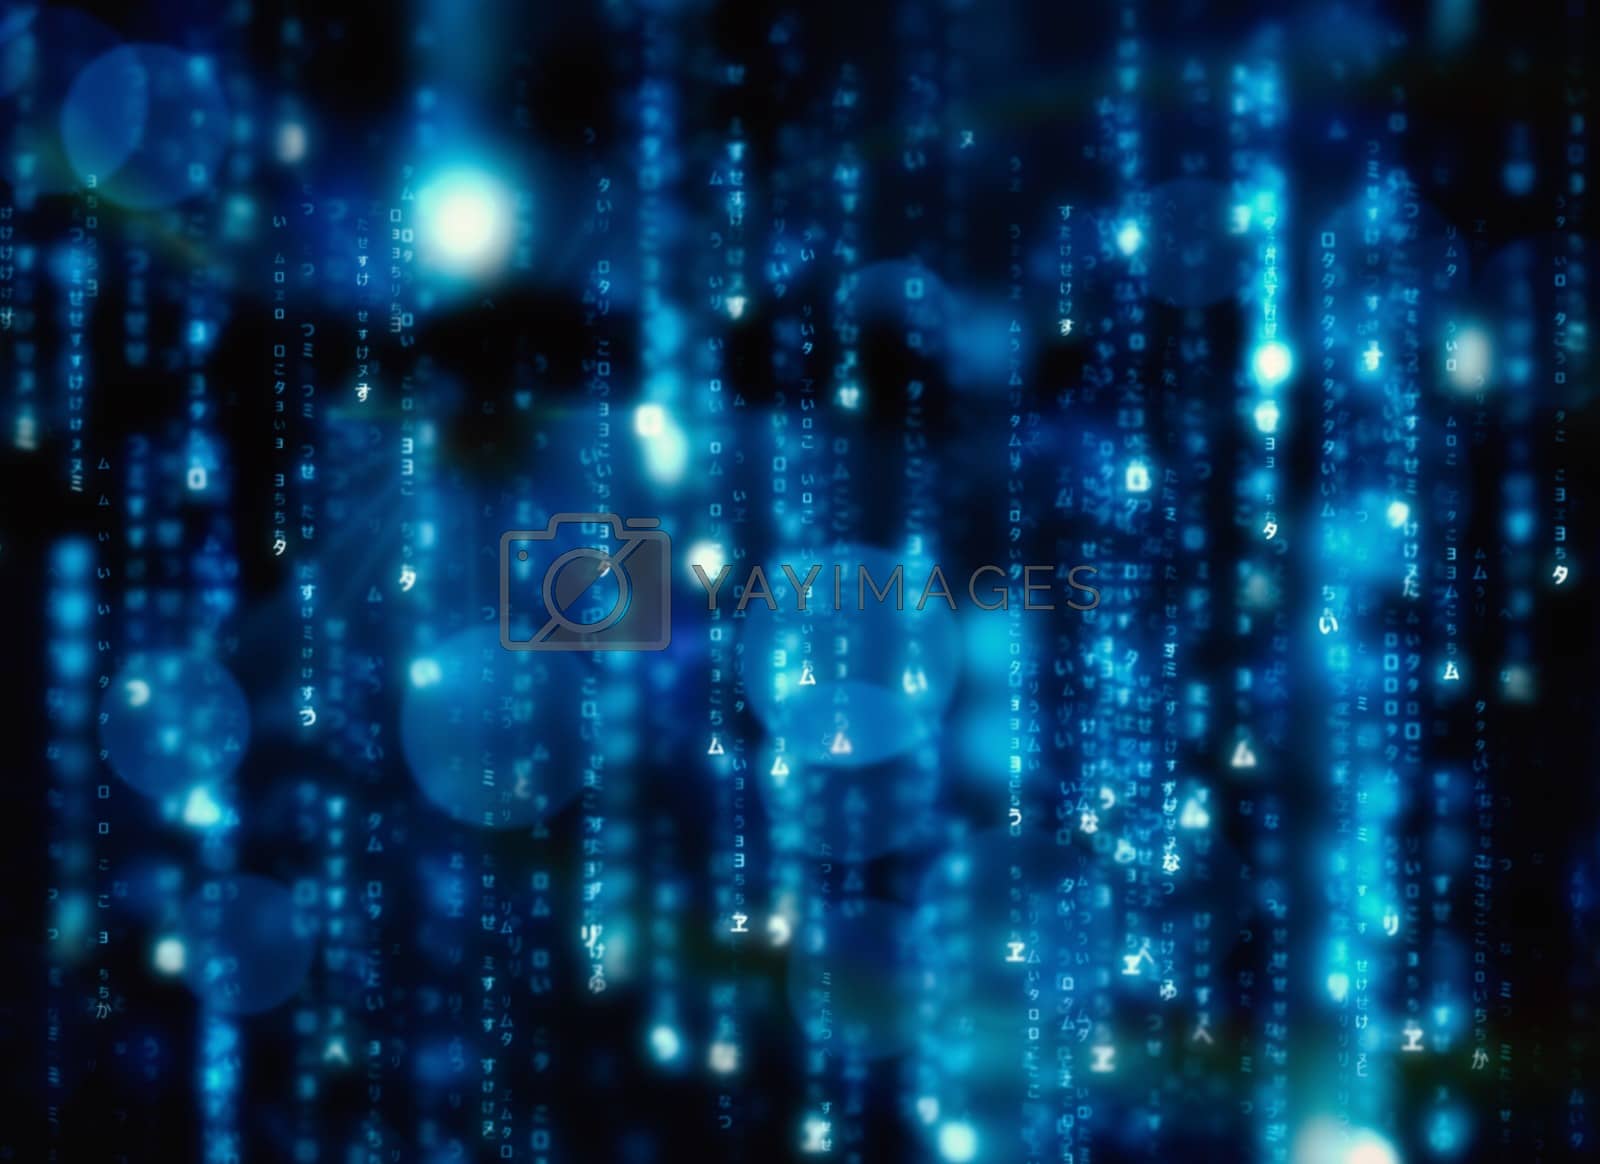 Royalty free image of Digitally generated black and blue matrix by Wavebreakmedia